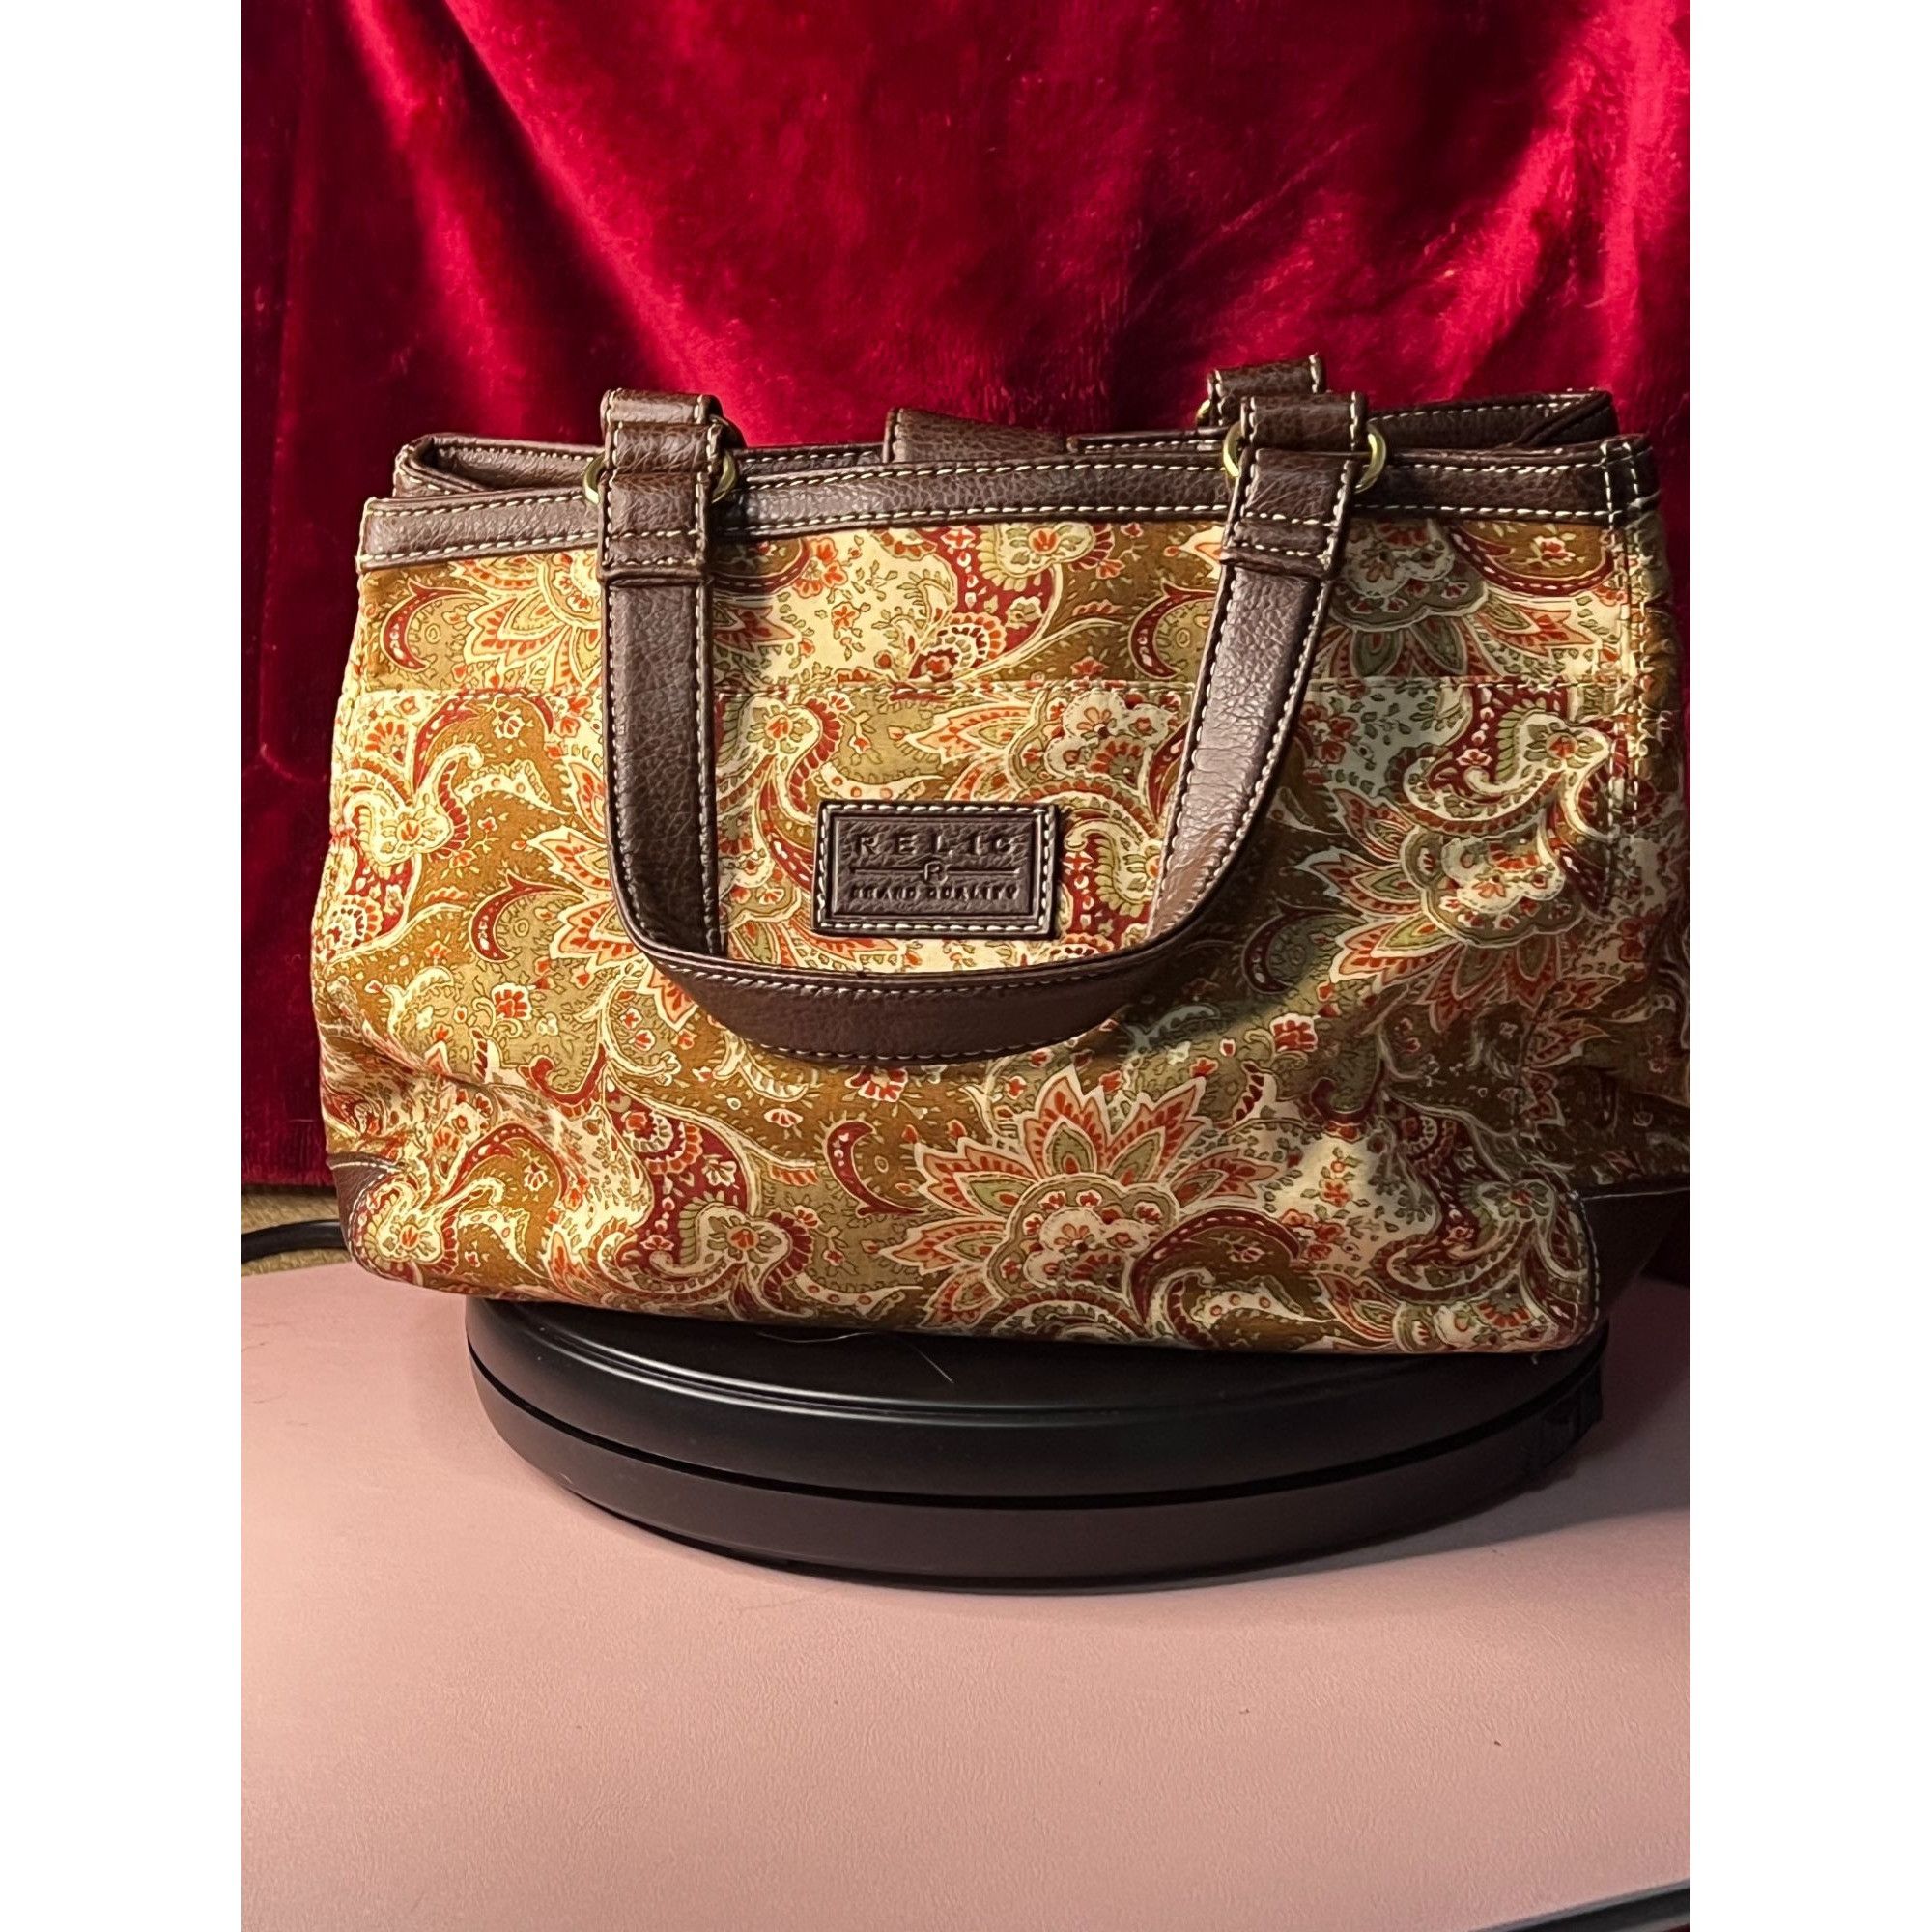 Relic purse. New  Relic purses, Purses, Bags